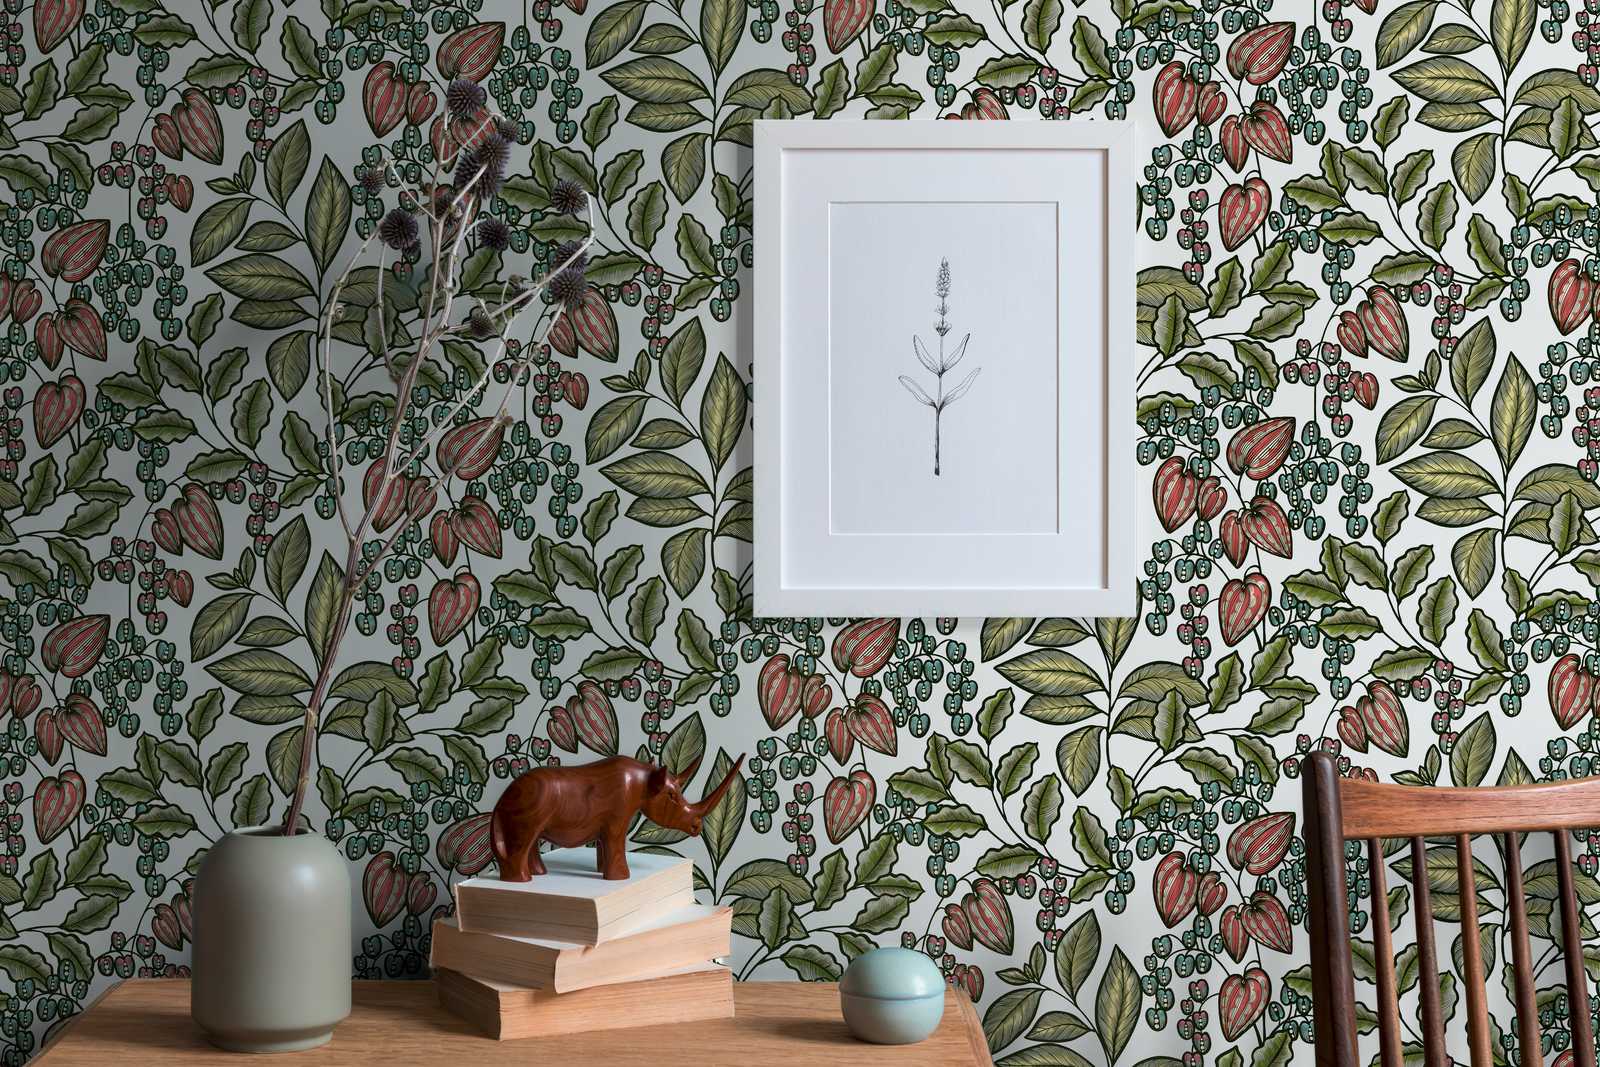             Florale Tapete Natur Design Scandinavian Print – Bunt, Grün, Weiß
        